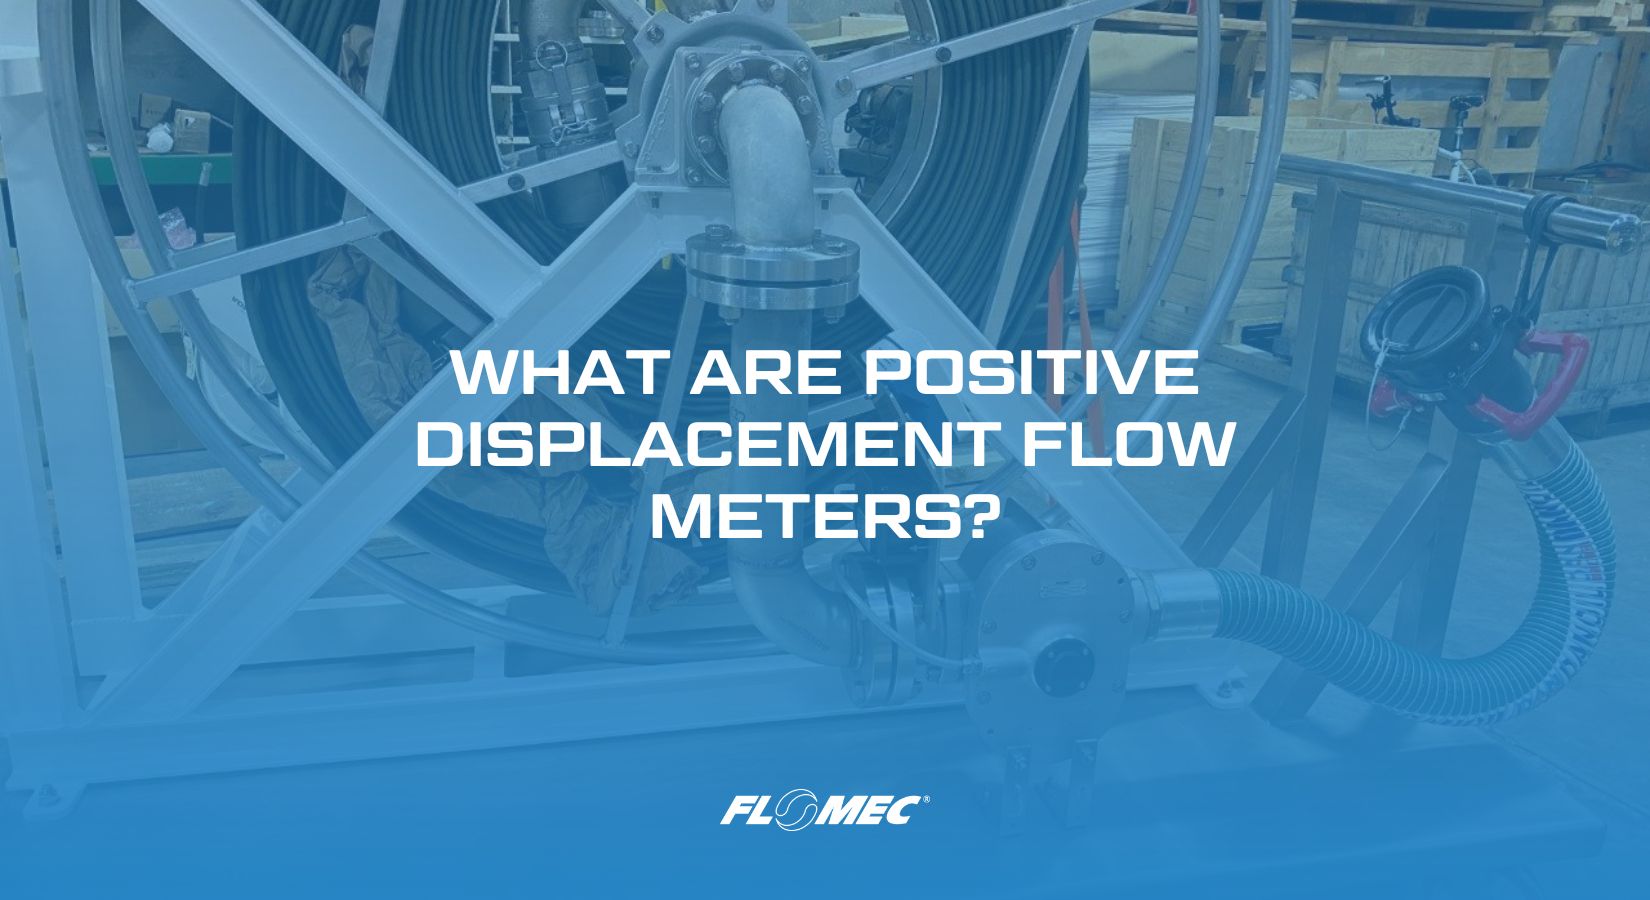 A FLOMEC Positive Displacement Flow Meter